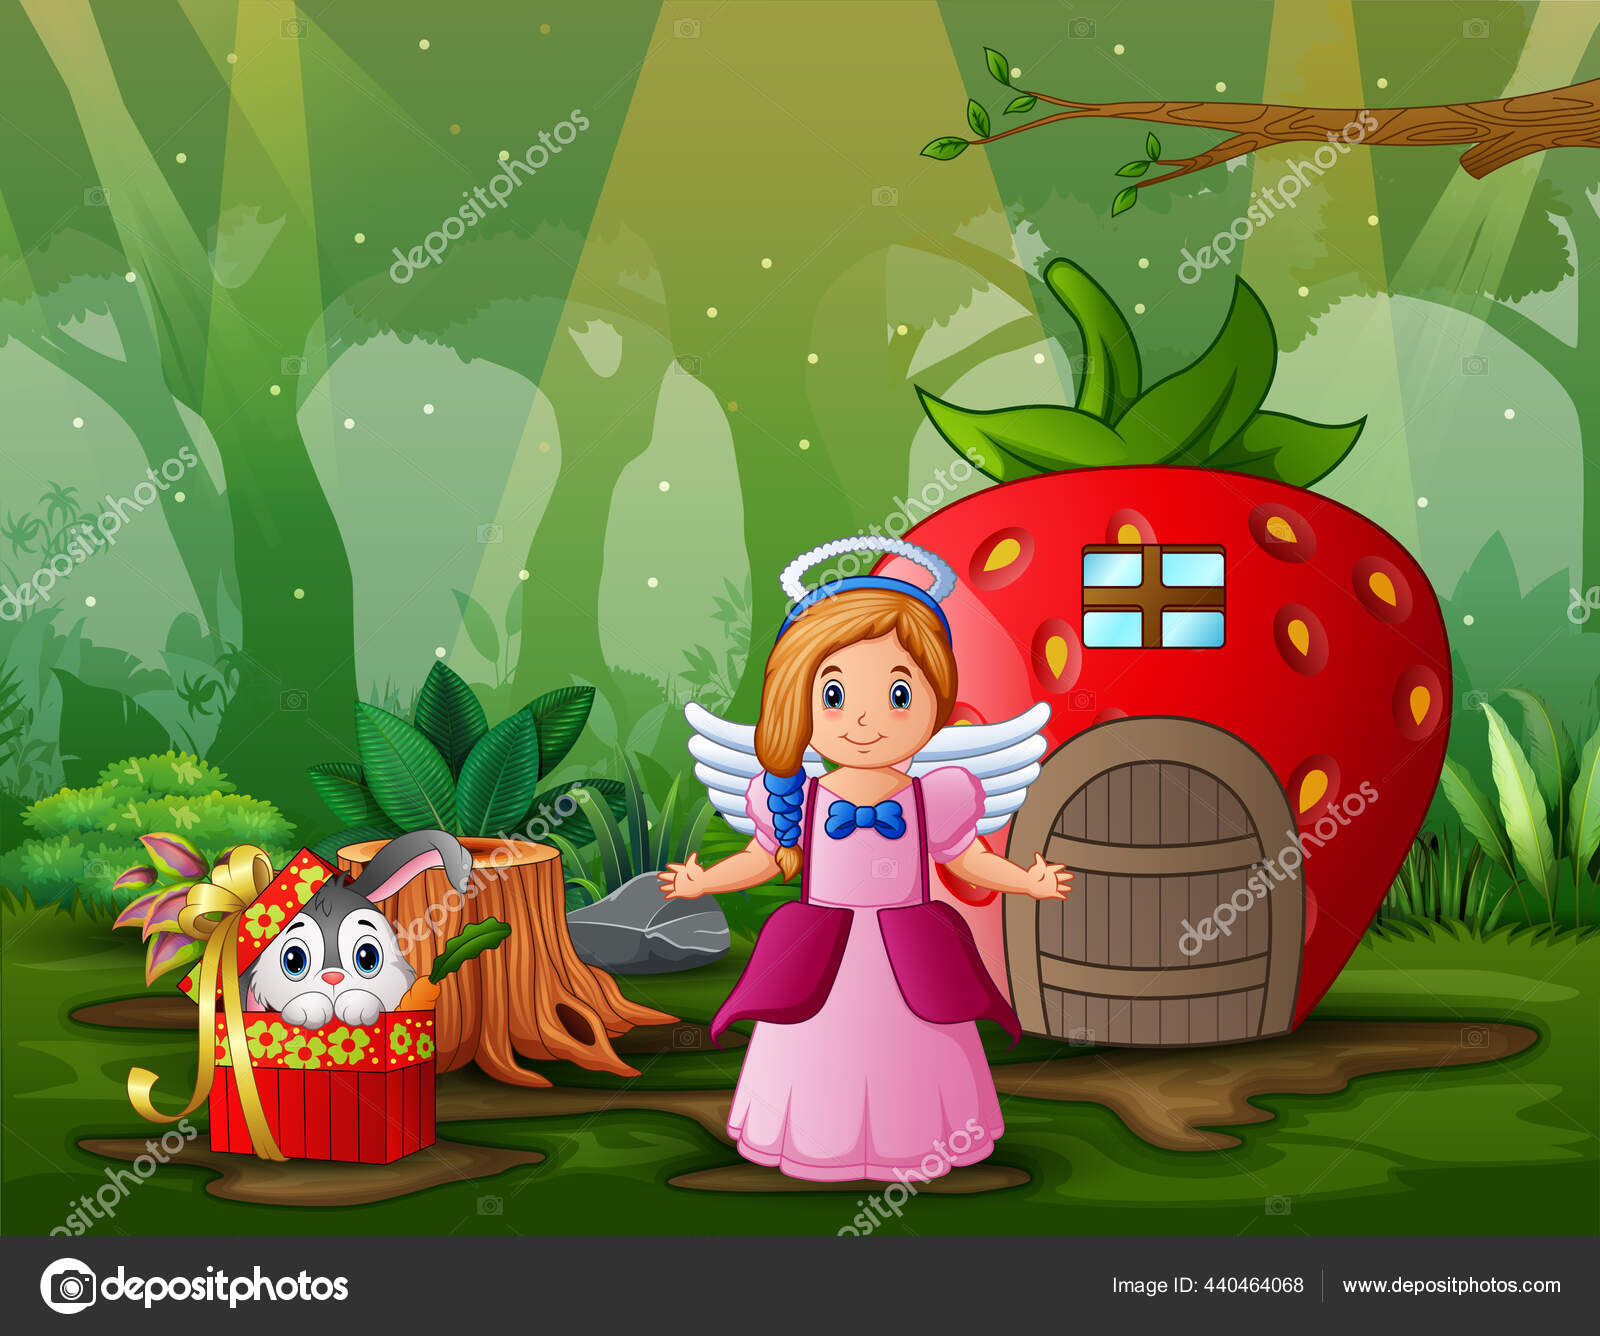 Gadis Kartun Malaikat Dan Hadiah Kelinci Dalam Ilustrasi Rumah Fantasi Stok Vektor Dualoro 440464068